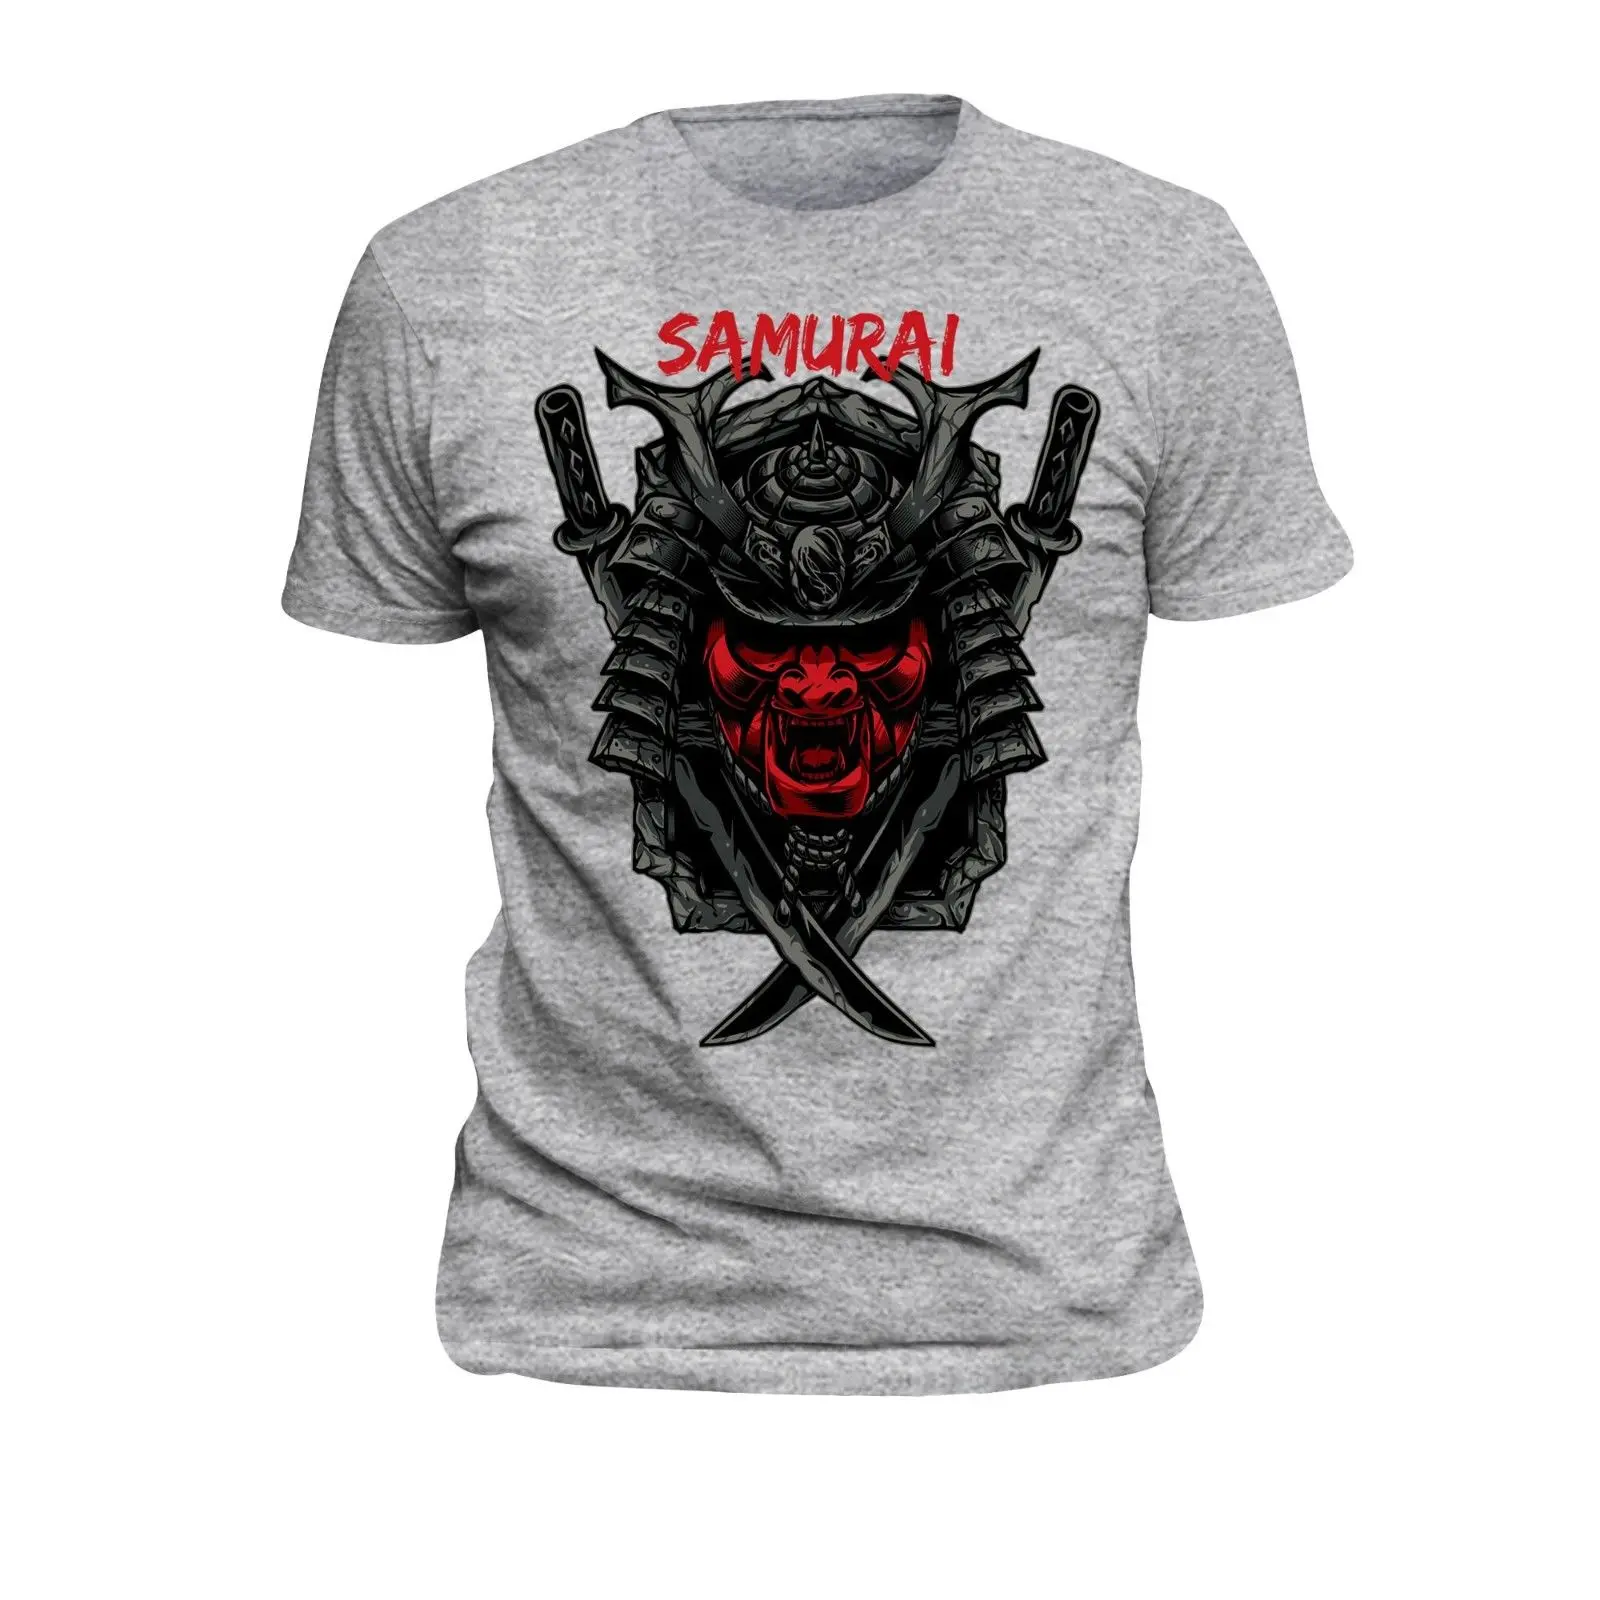 Hot Sale T-Shirt Samurai/Manner/Grau/Freizeit/Militar/Tattoo/ Kamikaze/Party/G28 Summer Style Tee Shirt Fashion Funny New